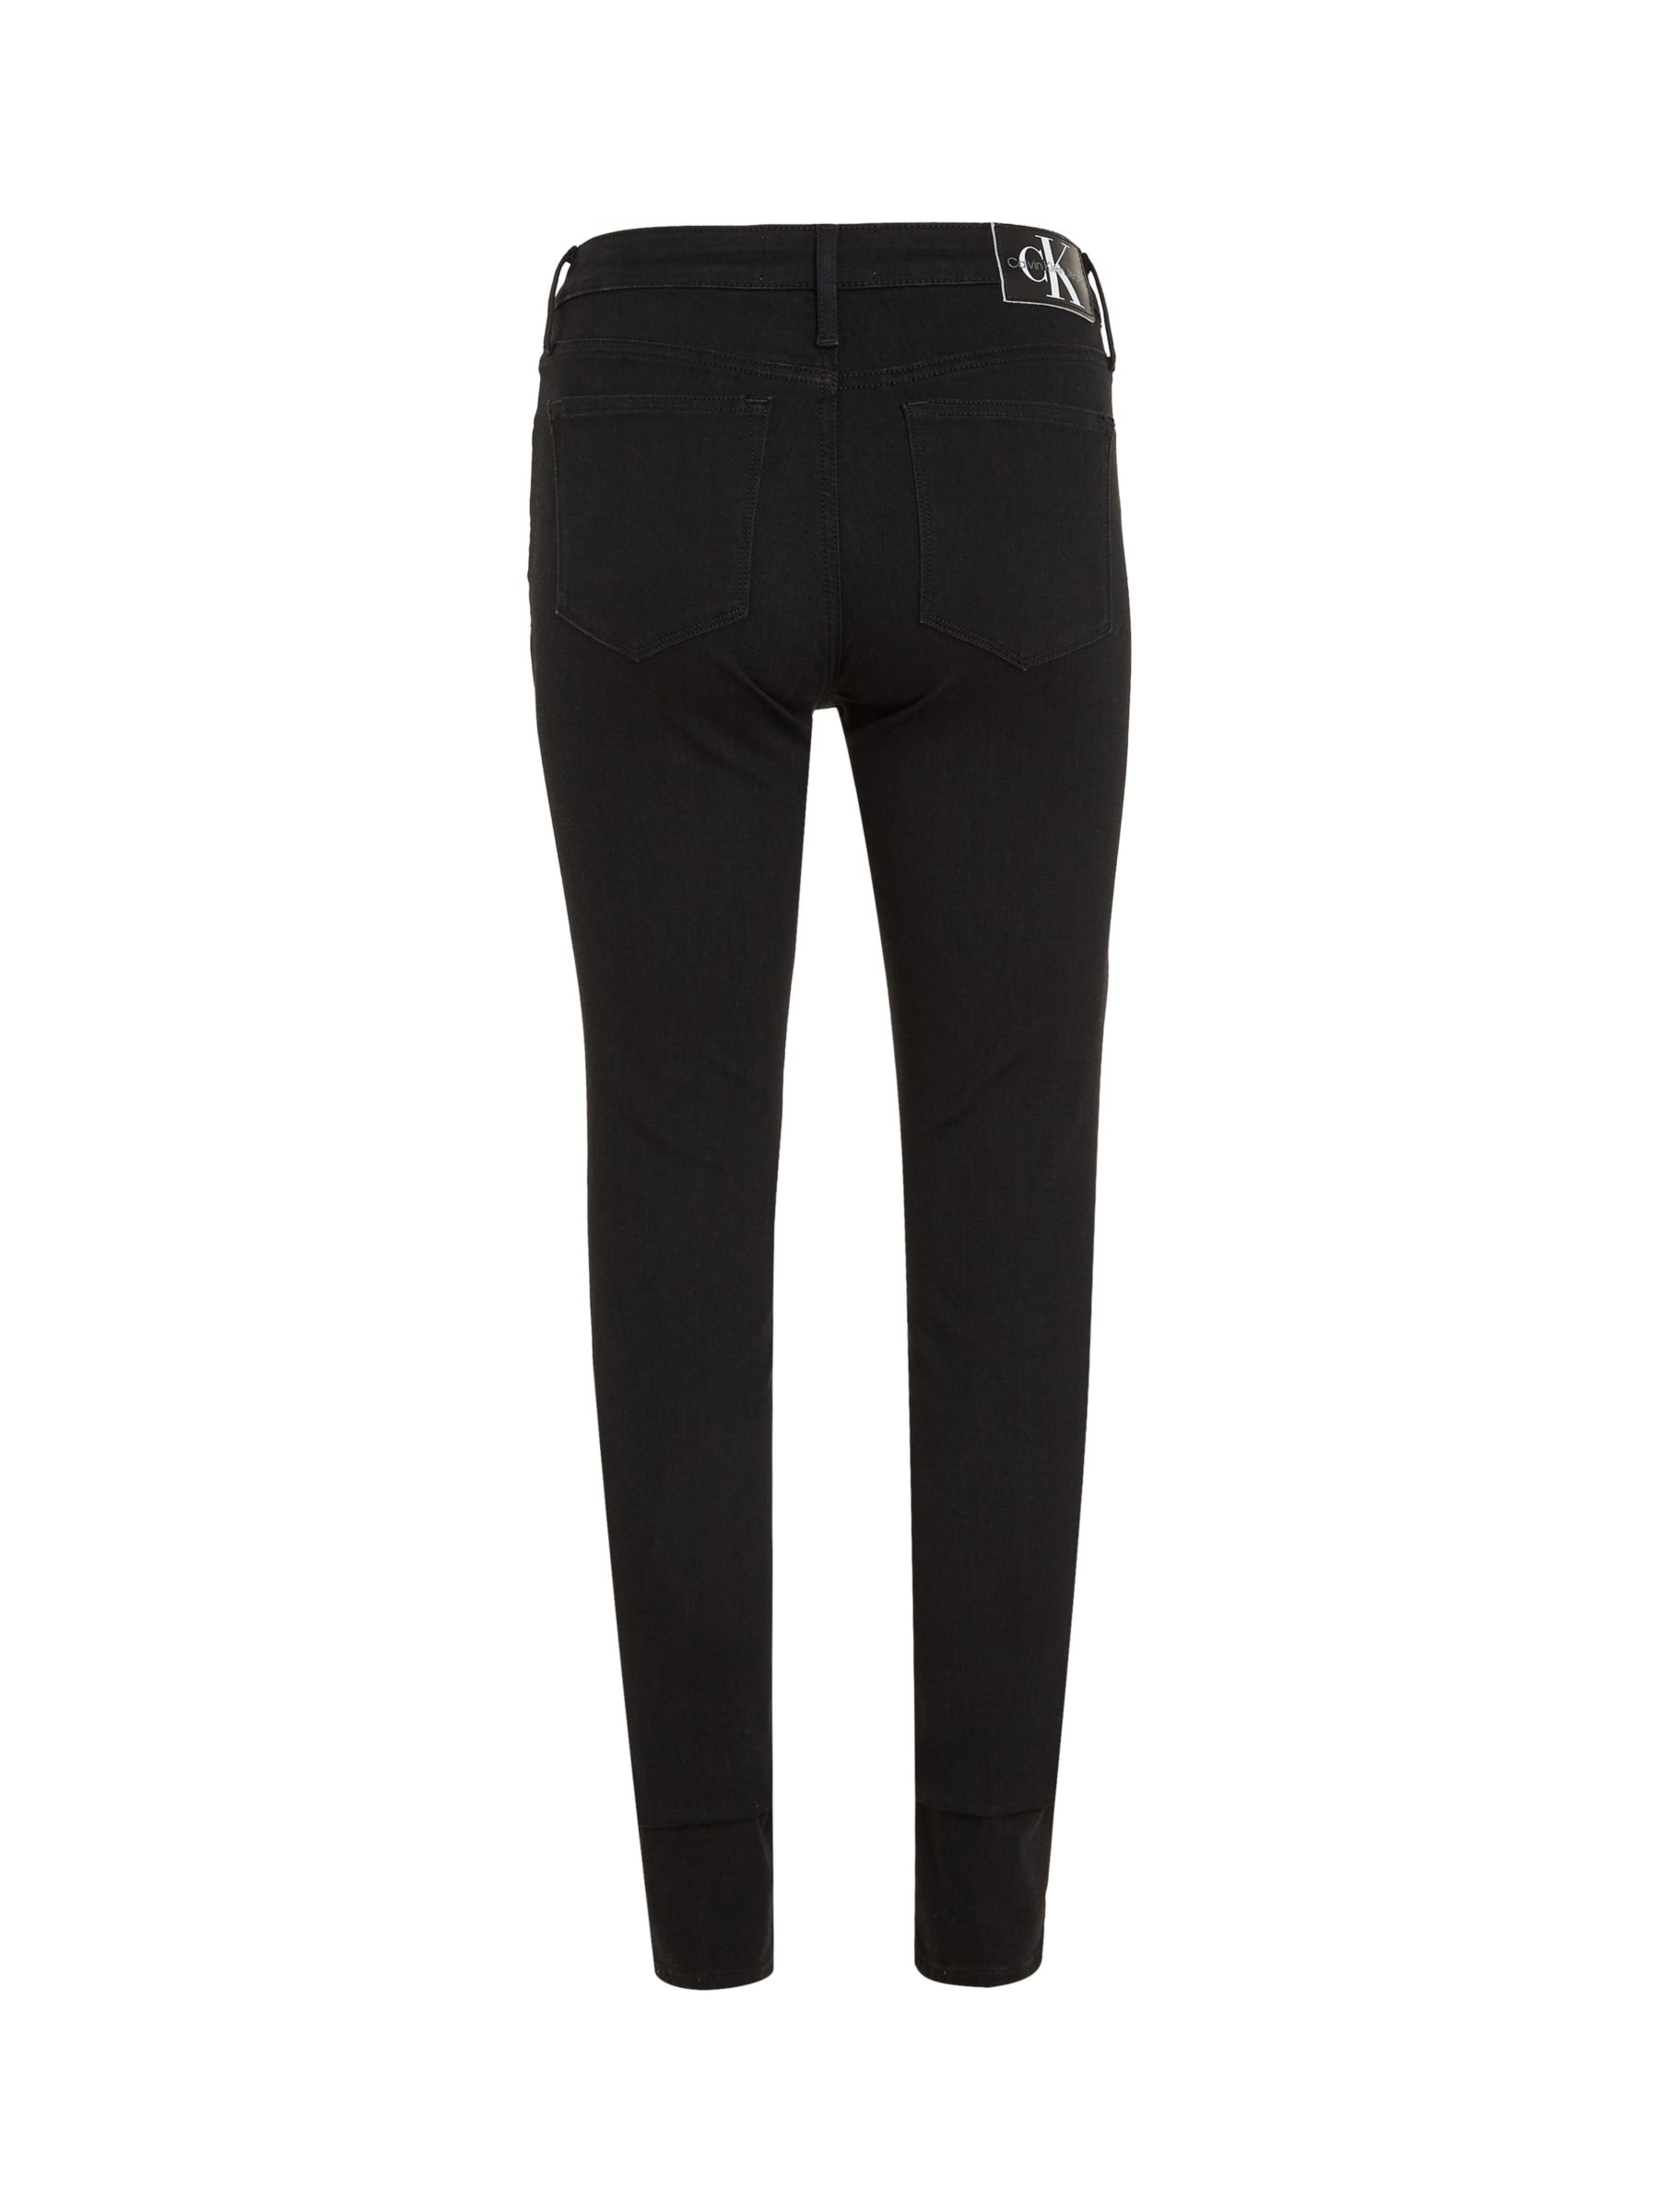 Calvin Klein Mid Rise Skinny Jeans, Black, 28R